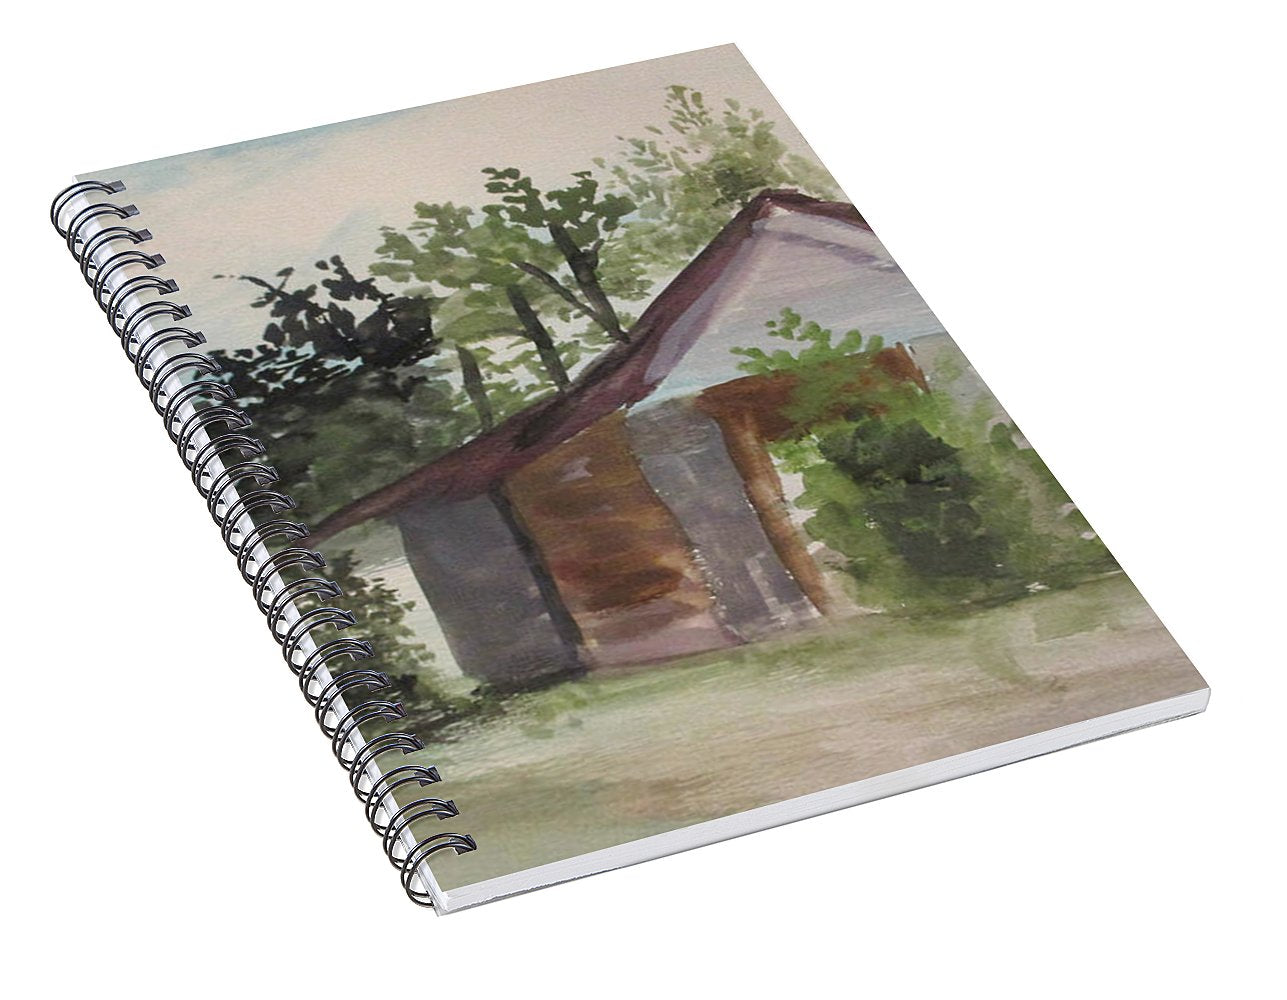 4 Seasons Cottage - Spiral Notebook